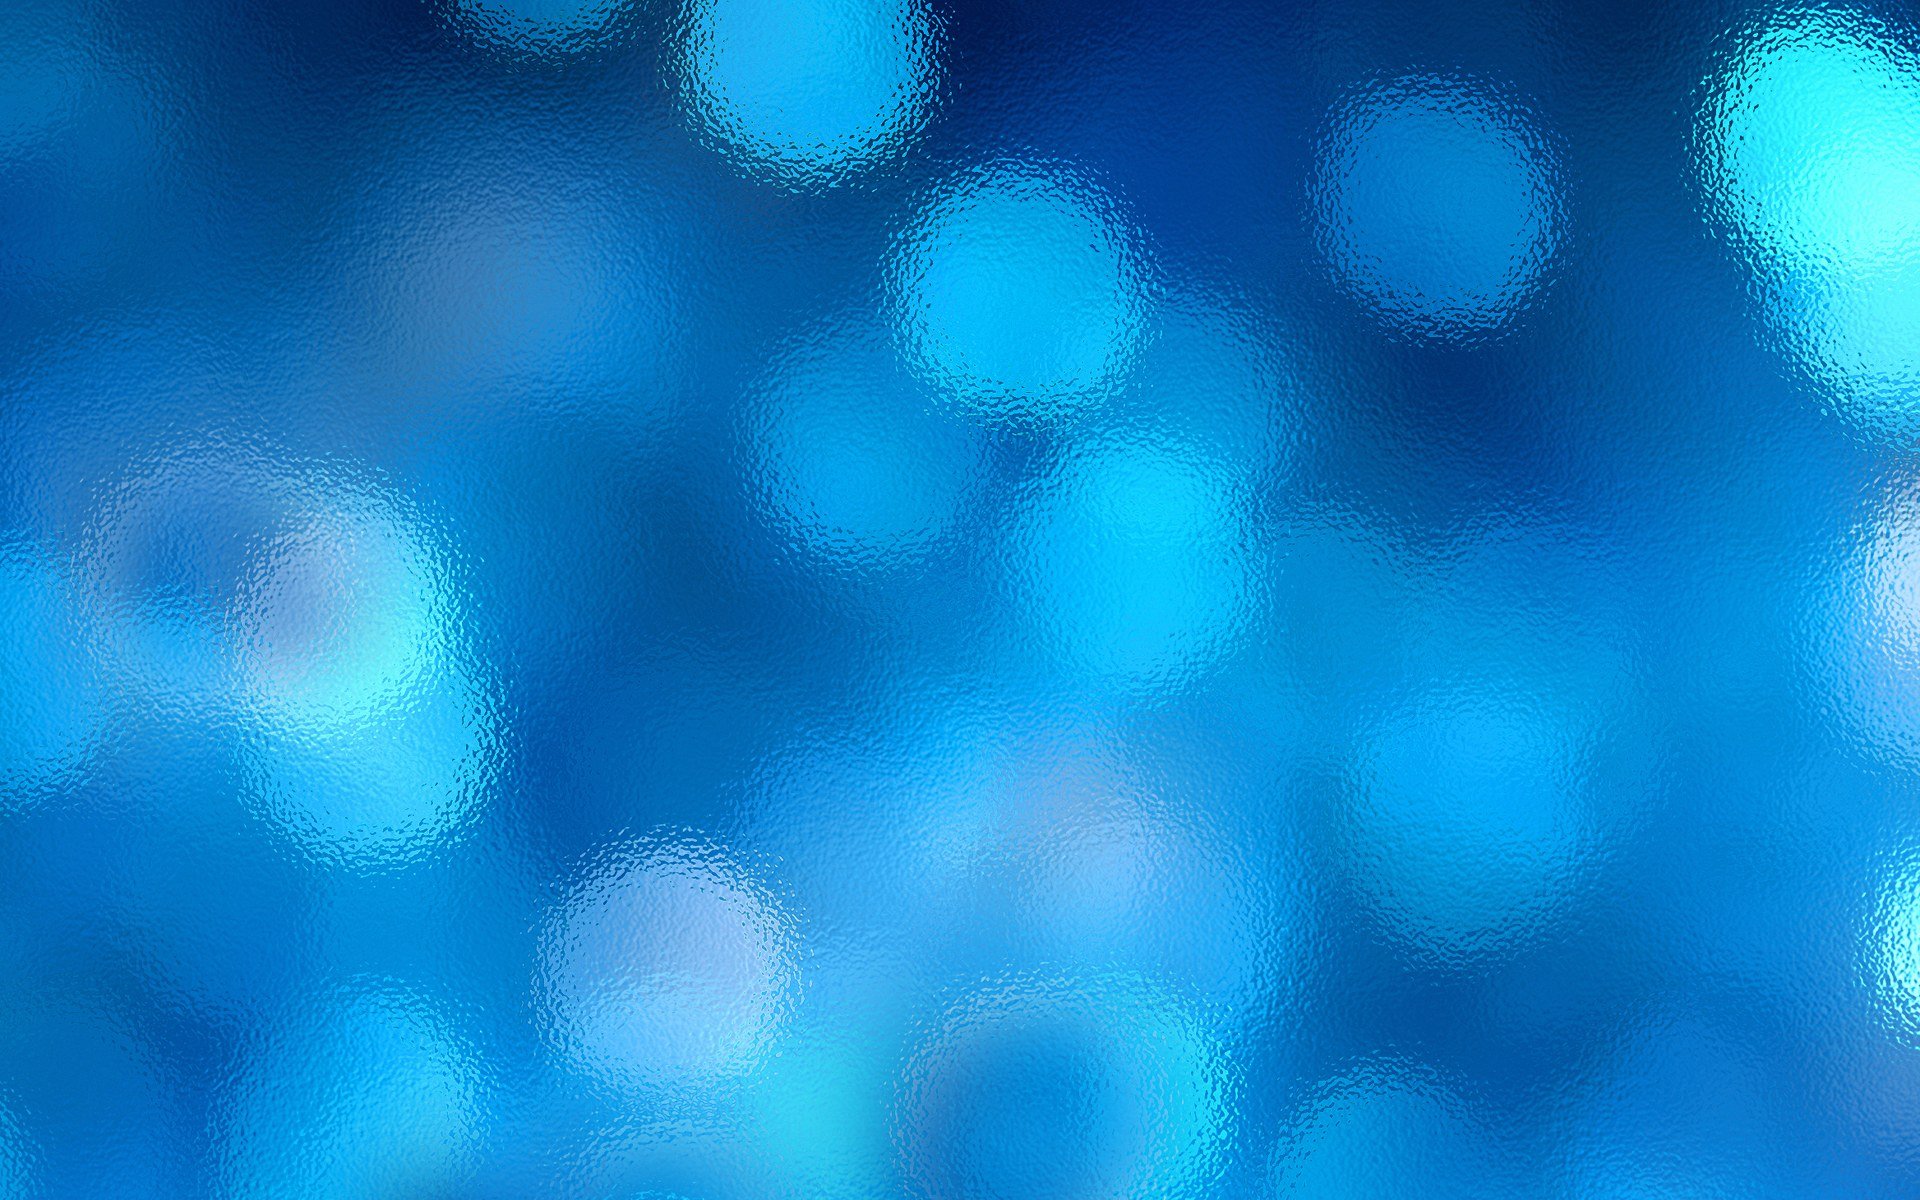  orgwp contentuploads201207Abstract Blue backgrounds 32jpg 1920x1200